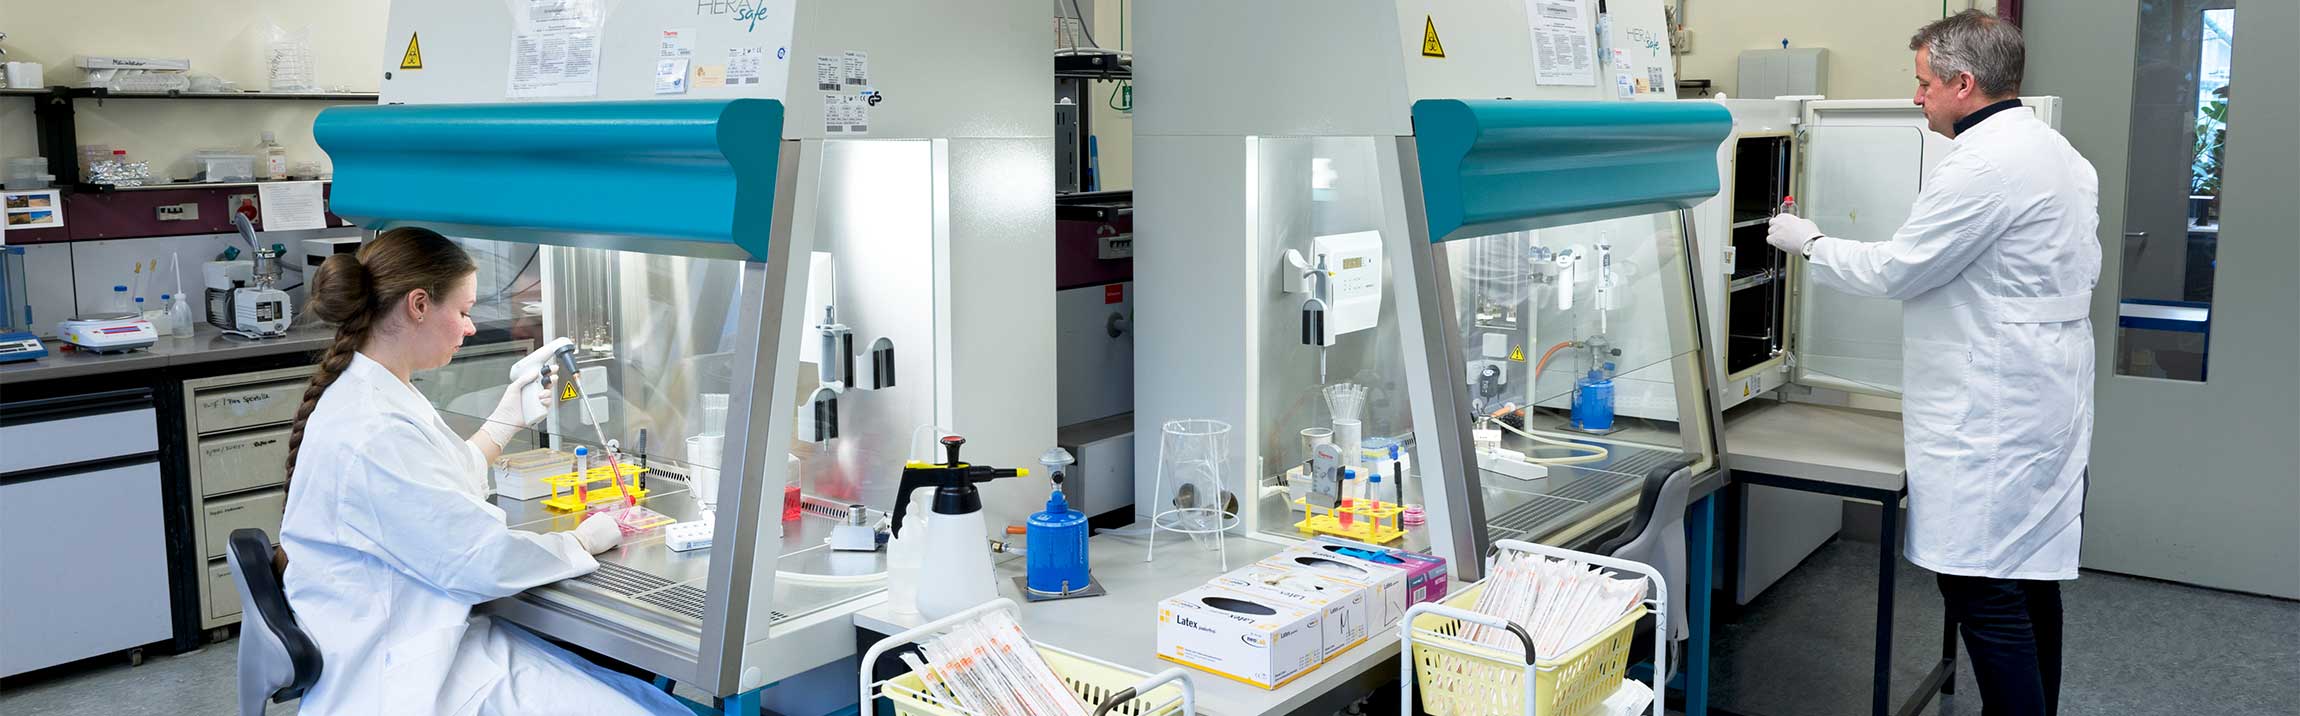 Lab for cell culture techniques at Fraunhofer EMFT